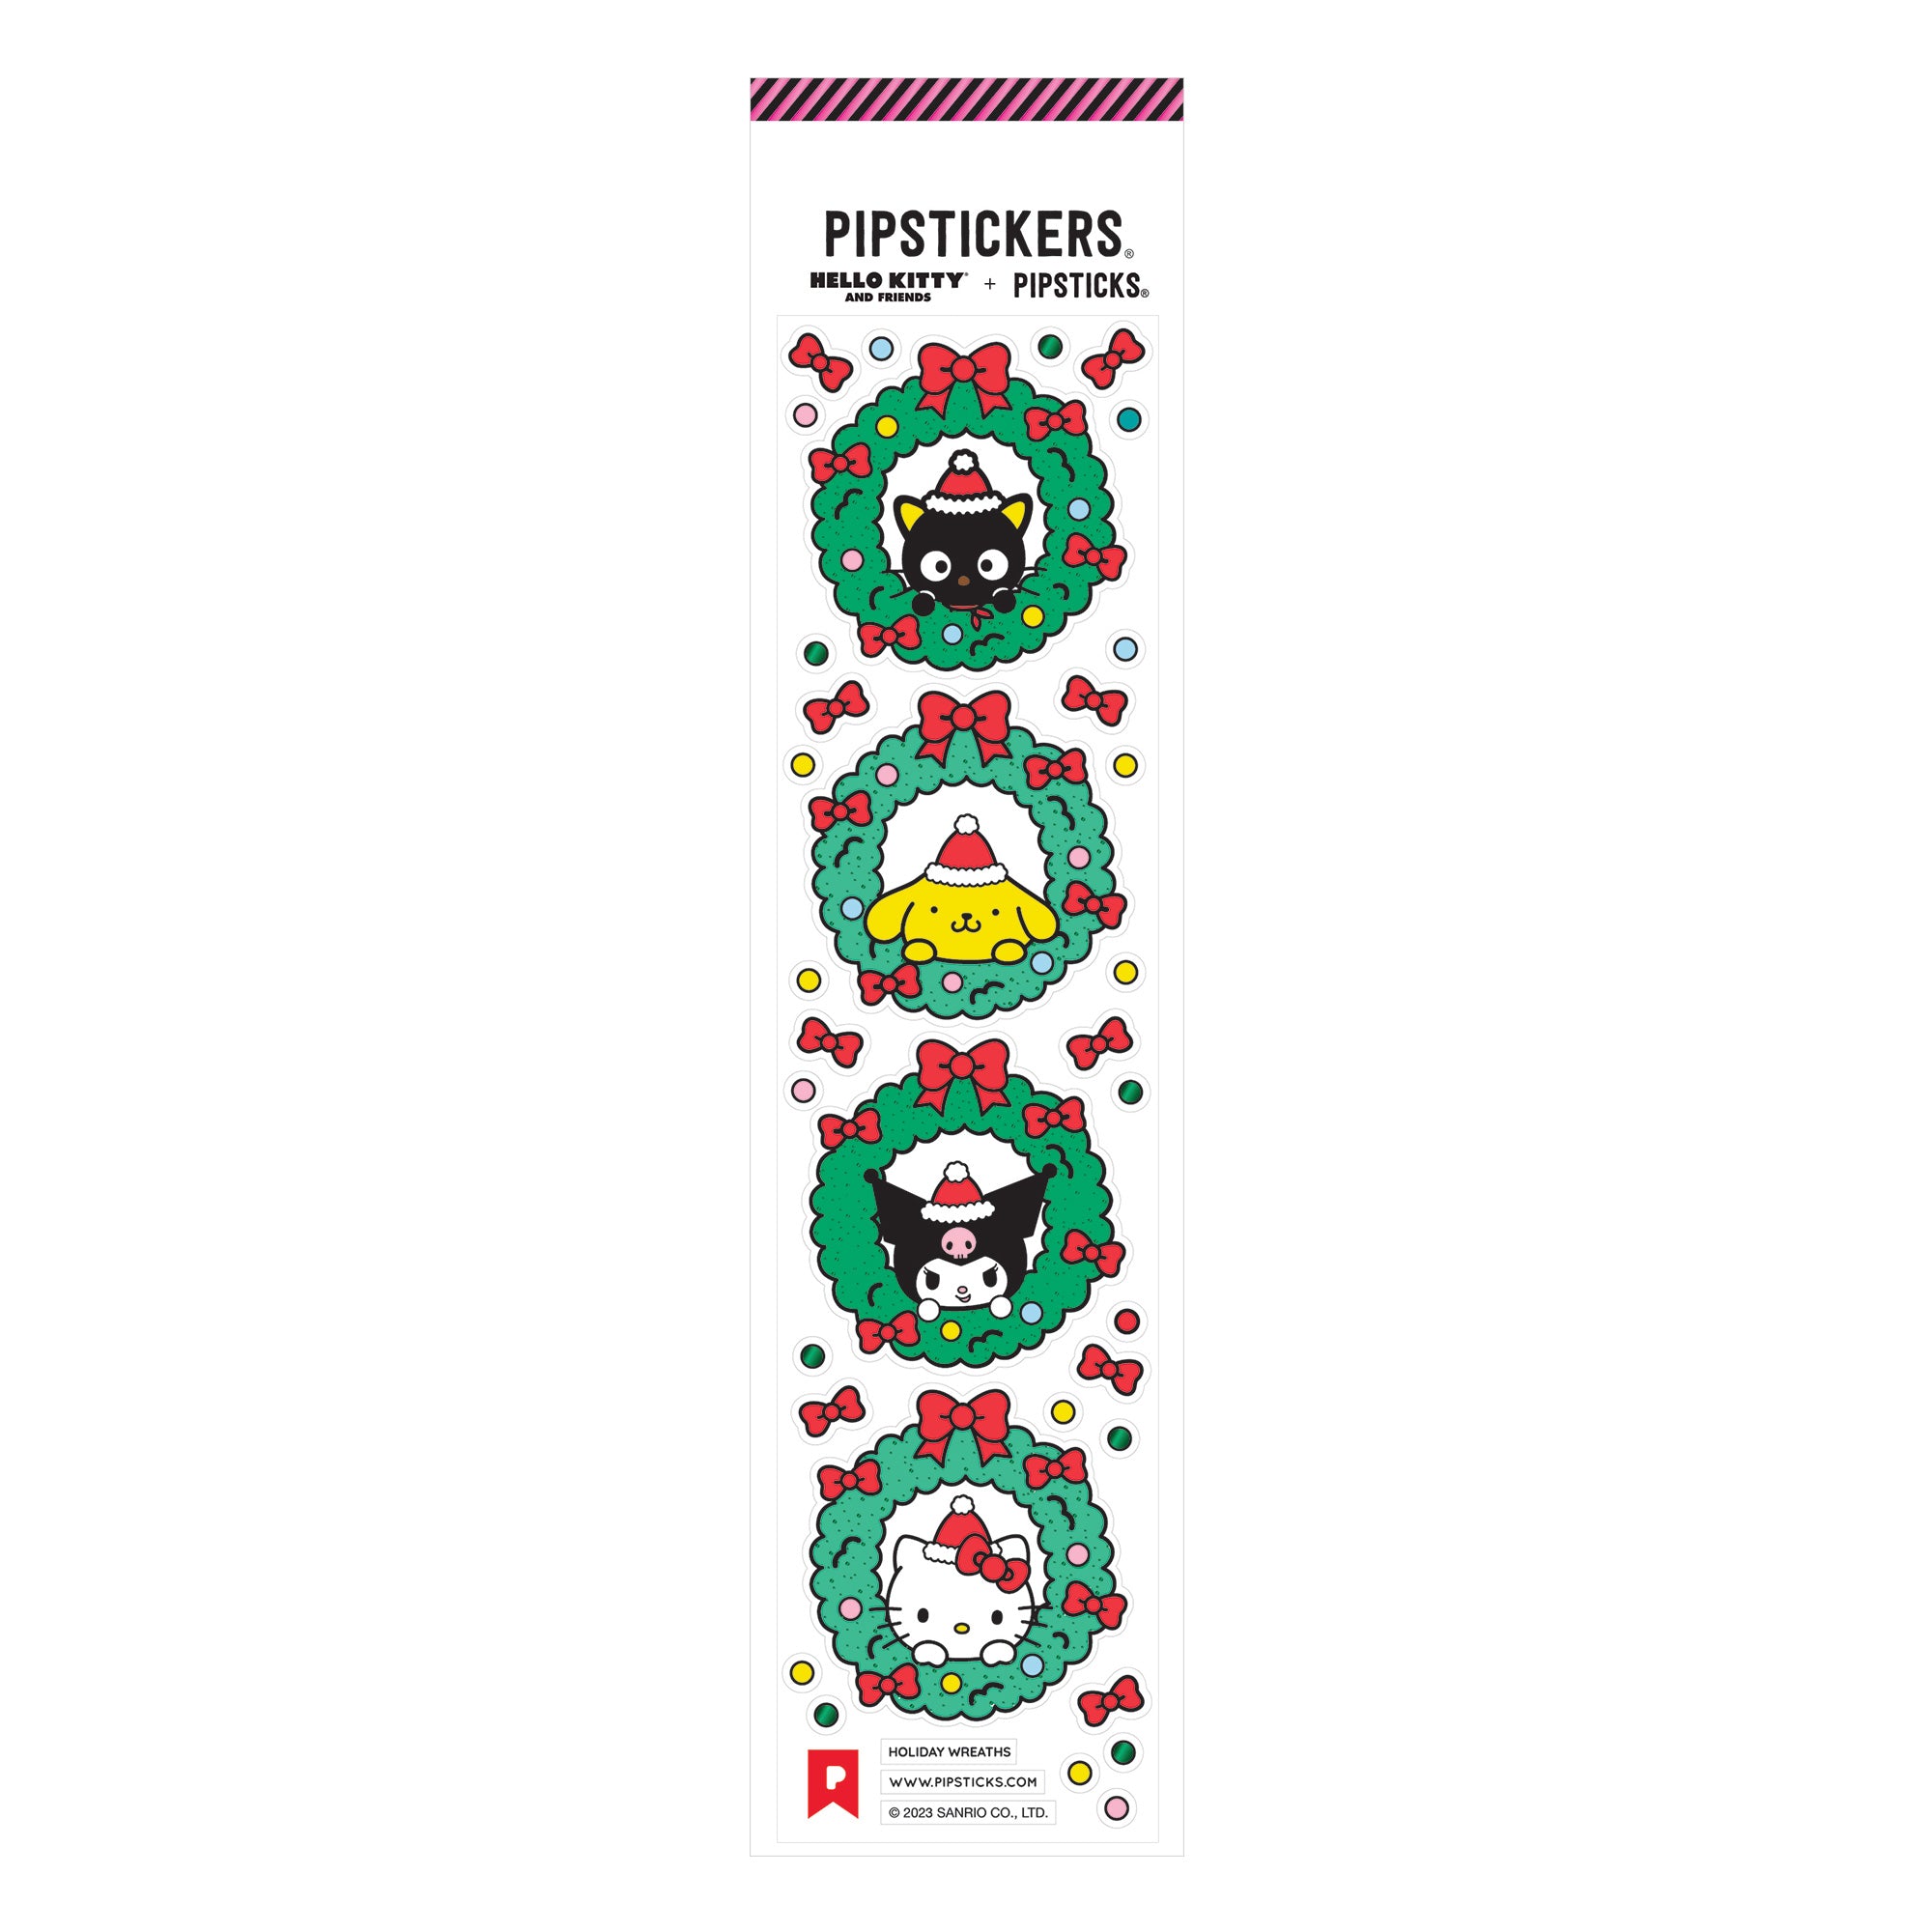 Hello Kitty and Friends Sanrio Raised Sticker Sheet 